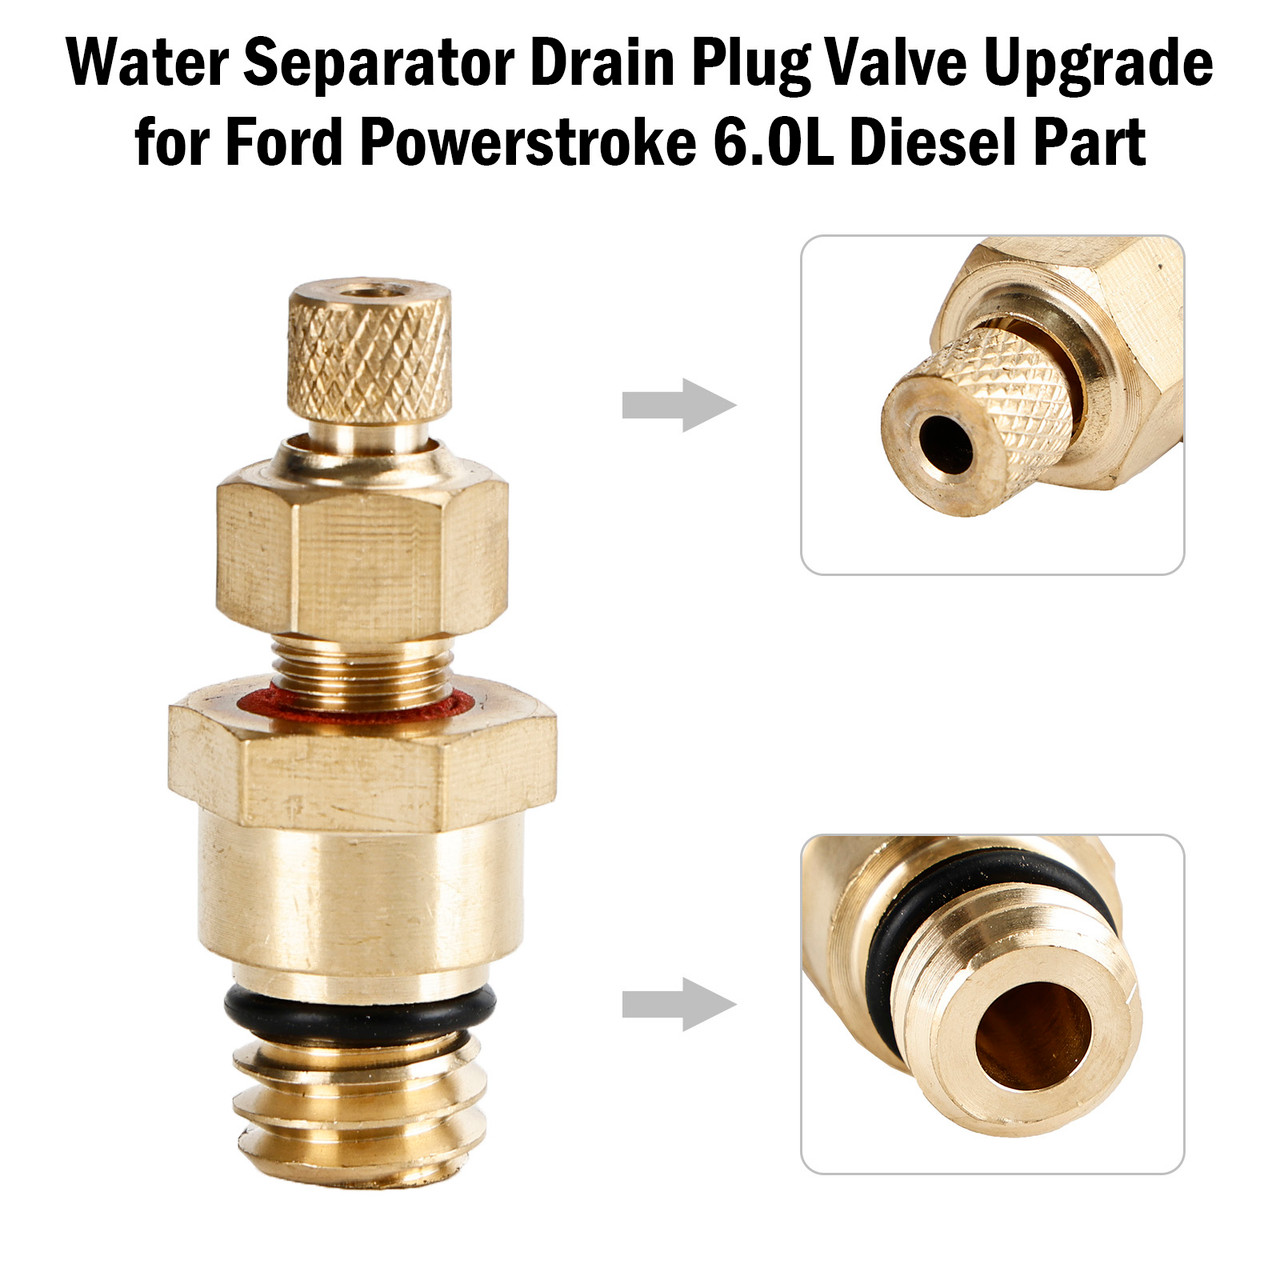 Water Separator Drain Plug Valve Upgrade for Ford Powerstroke 6.0L Diesel Part